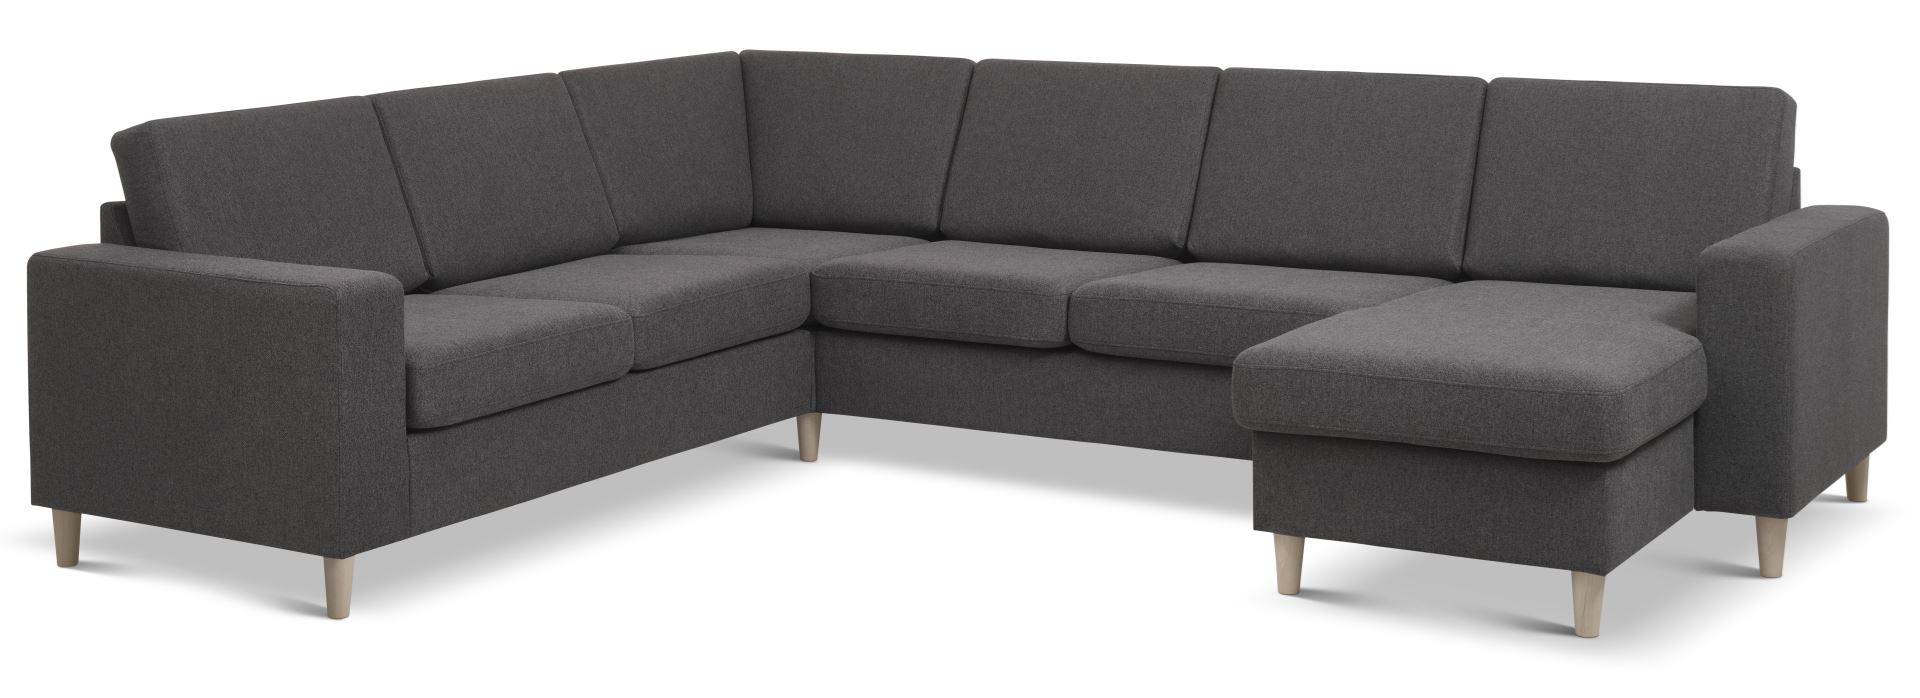 Pan set 6 U 2C3D sofa med chaiselong - antracitgrå polyester stof og natur træ